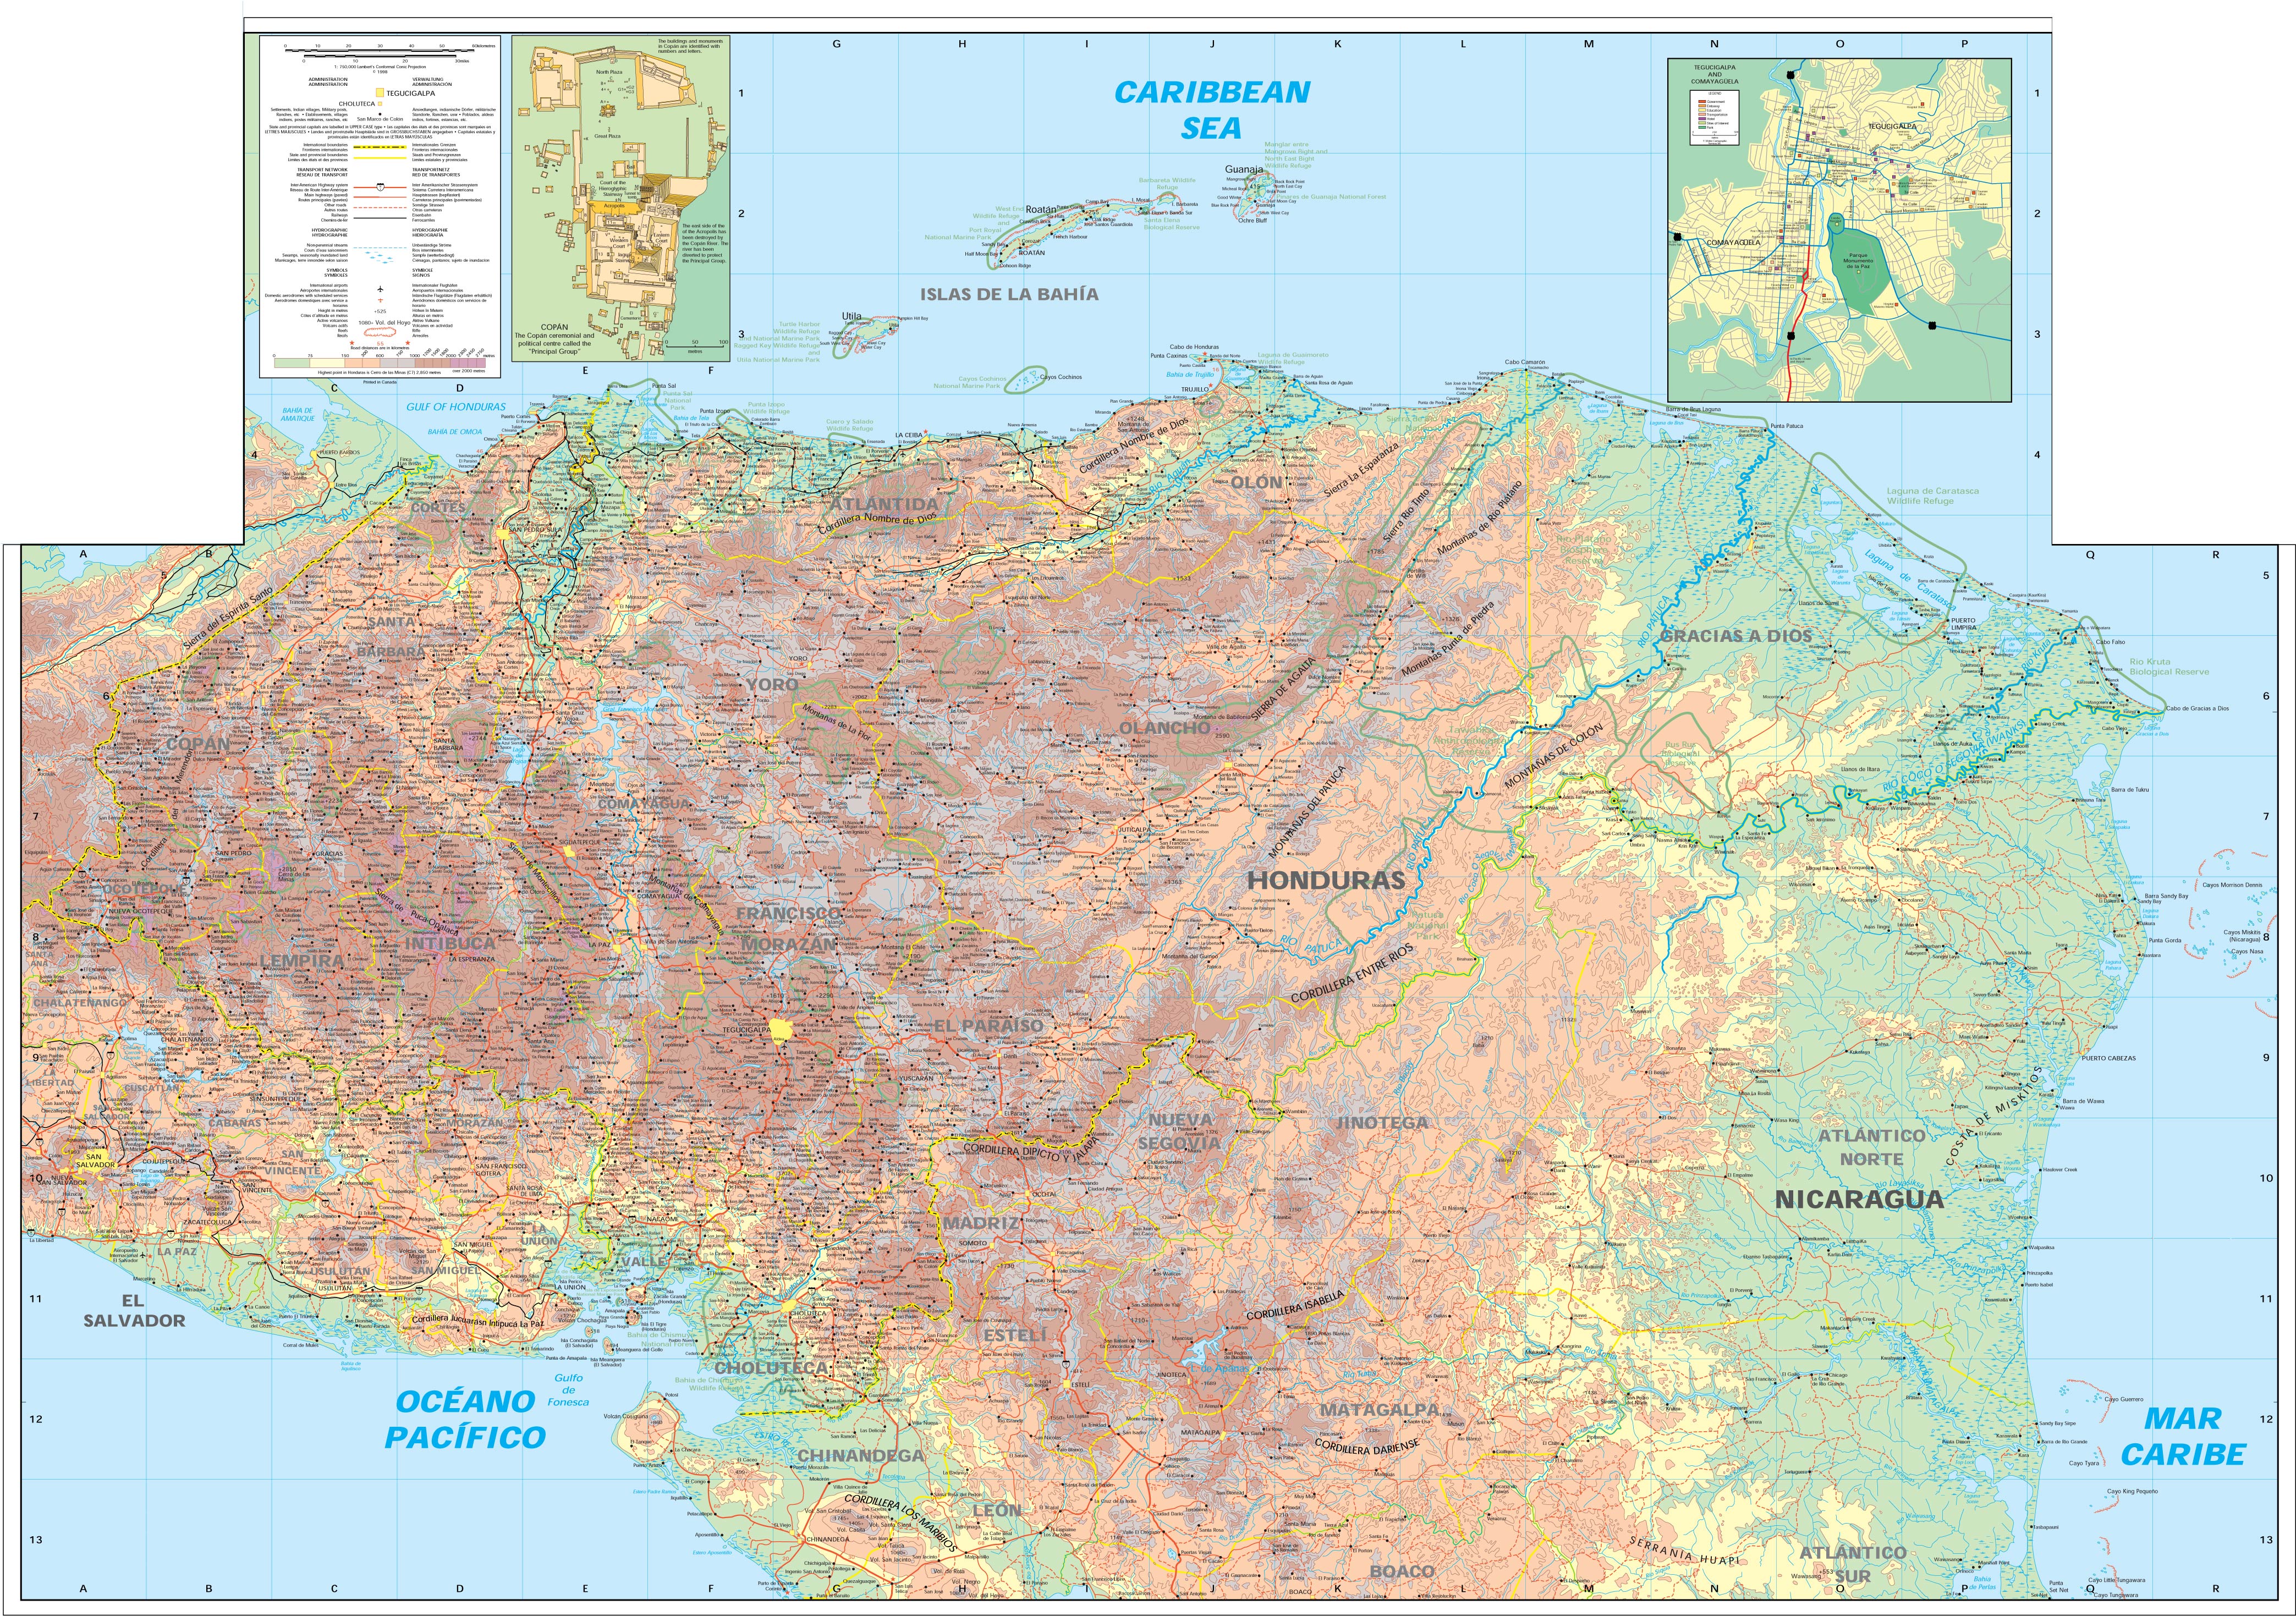 Honduras_fiziki_ve_topografik_harita.jpg